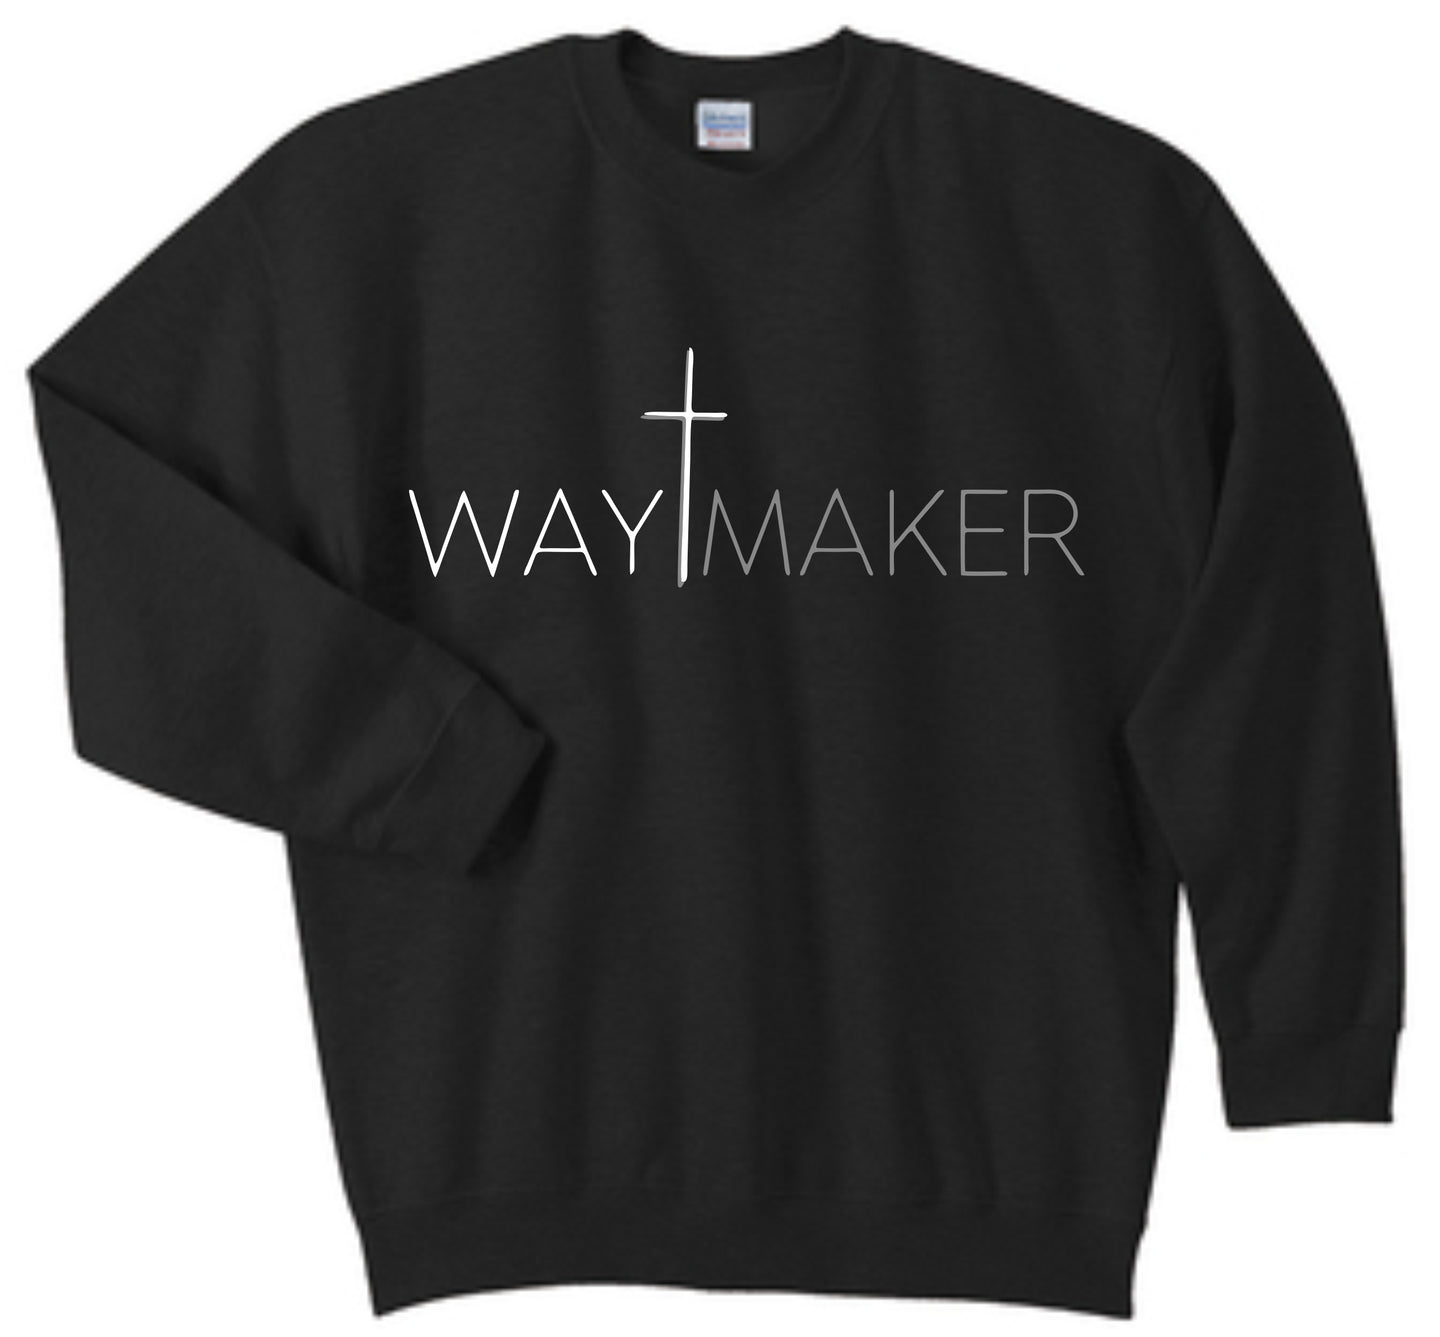 WayMaker Crewneck Sweatshirt